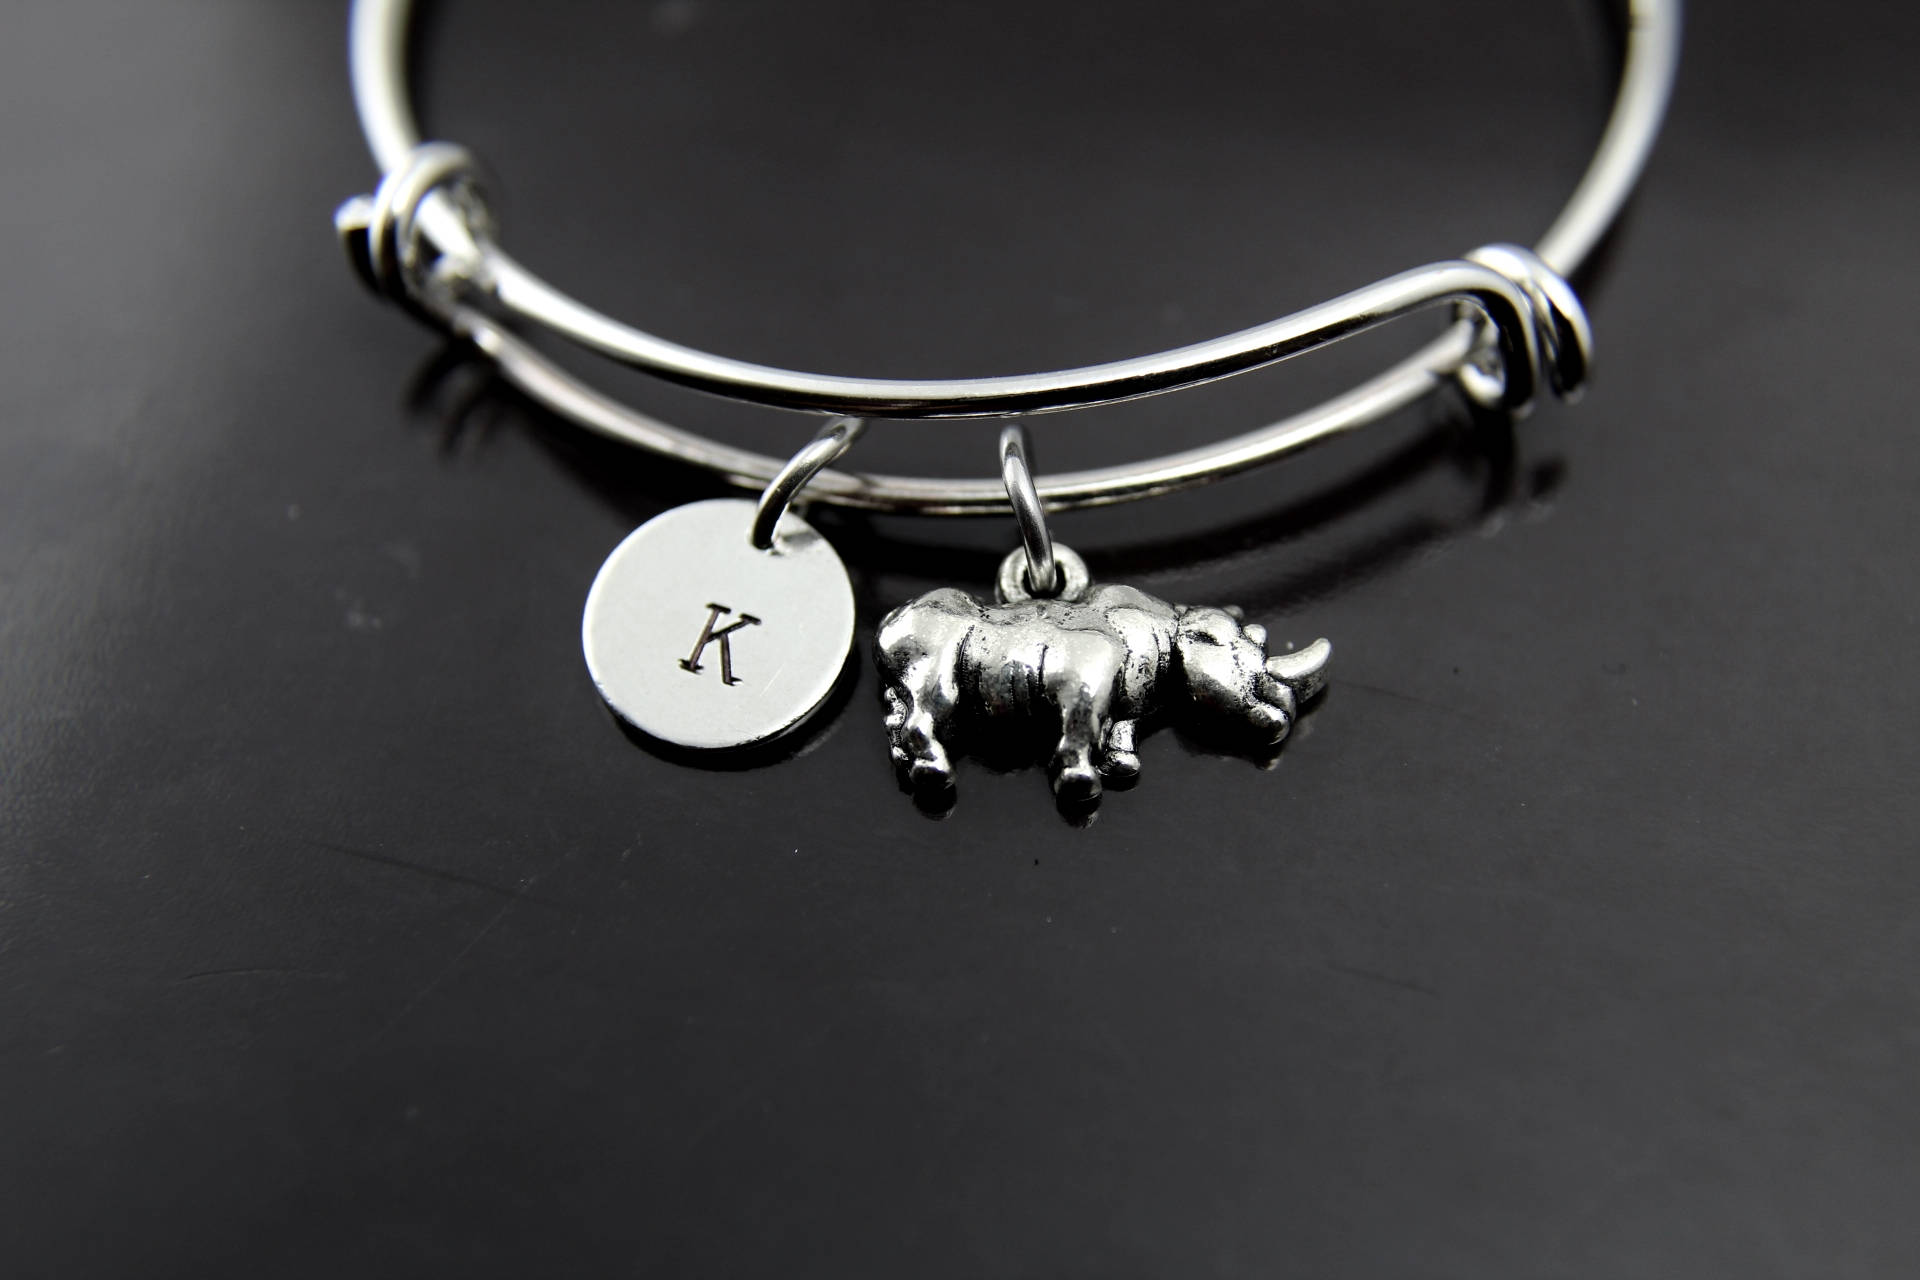 Rhino Charm Bracelet, Antique Silver, Initial Bracelet, Friendship